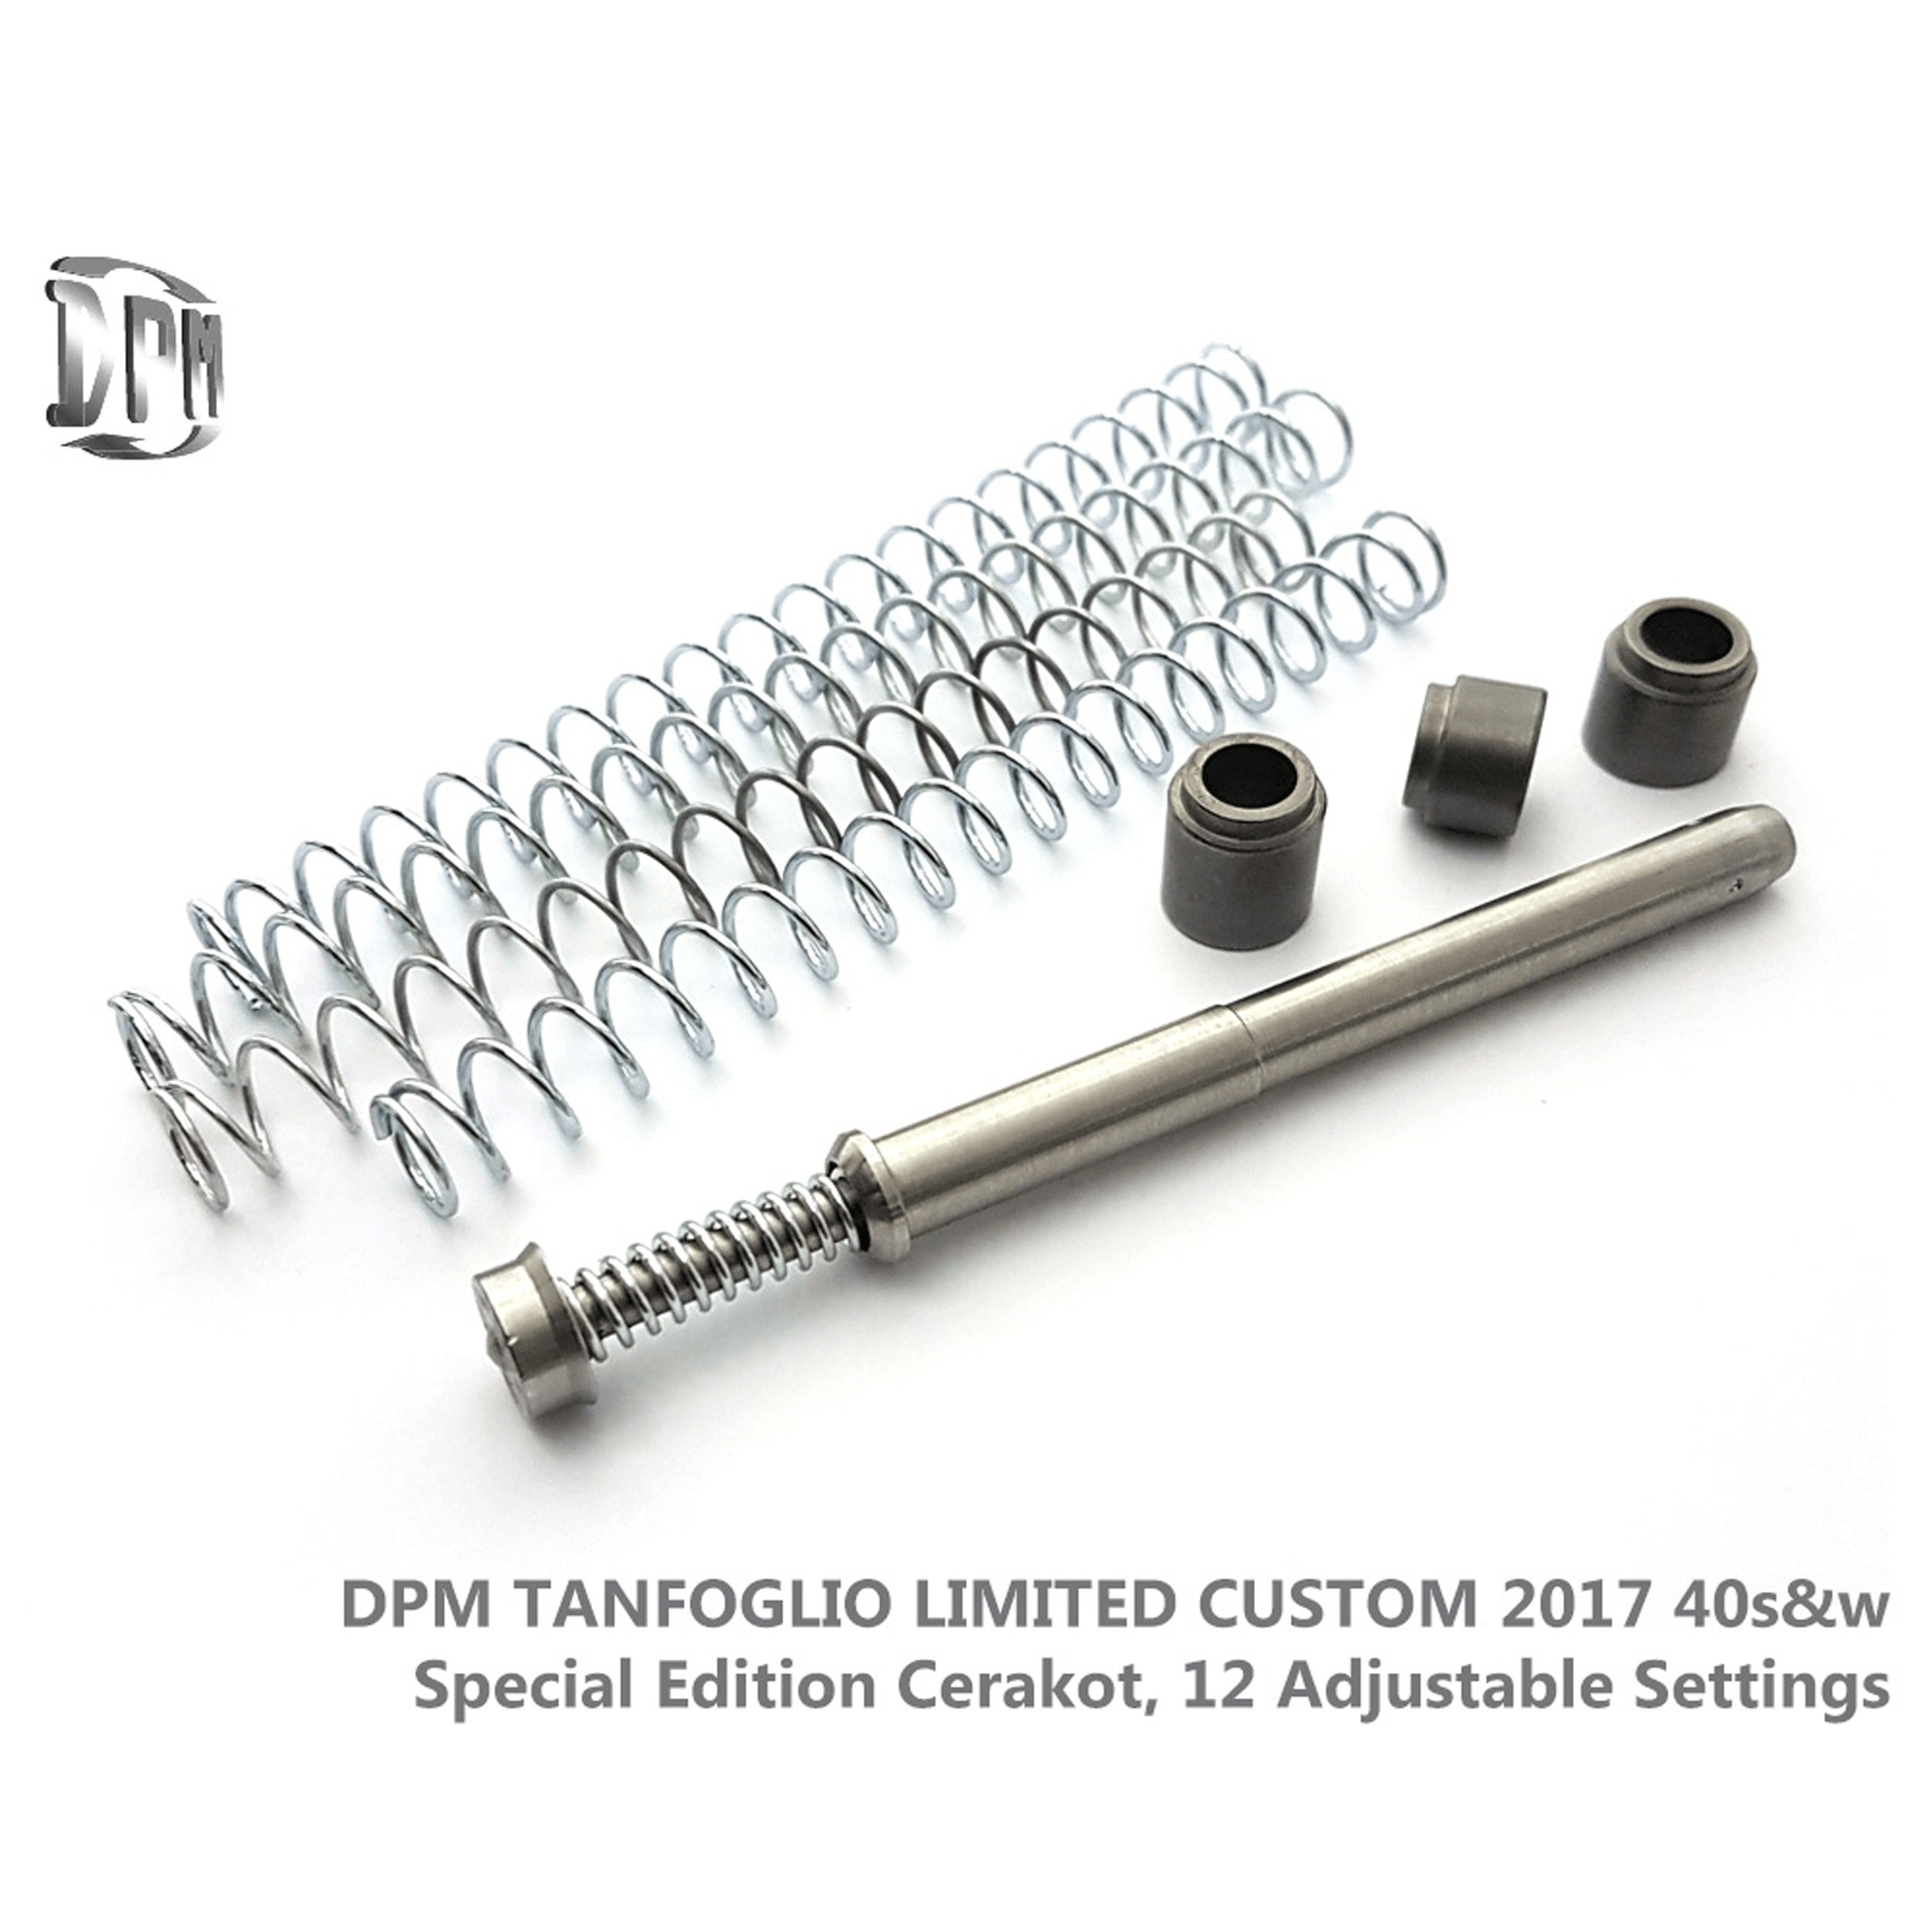 TANFOGLIO LIMITED CUSTOM 2017 40s&w Special Edition Cerakot, 12 Adjustable Settings